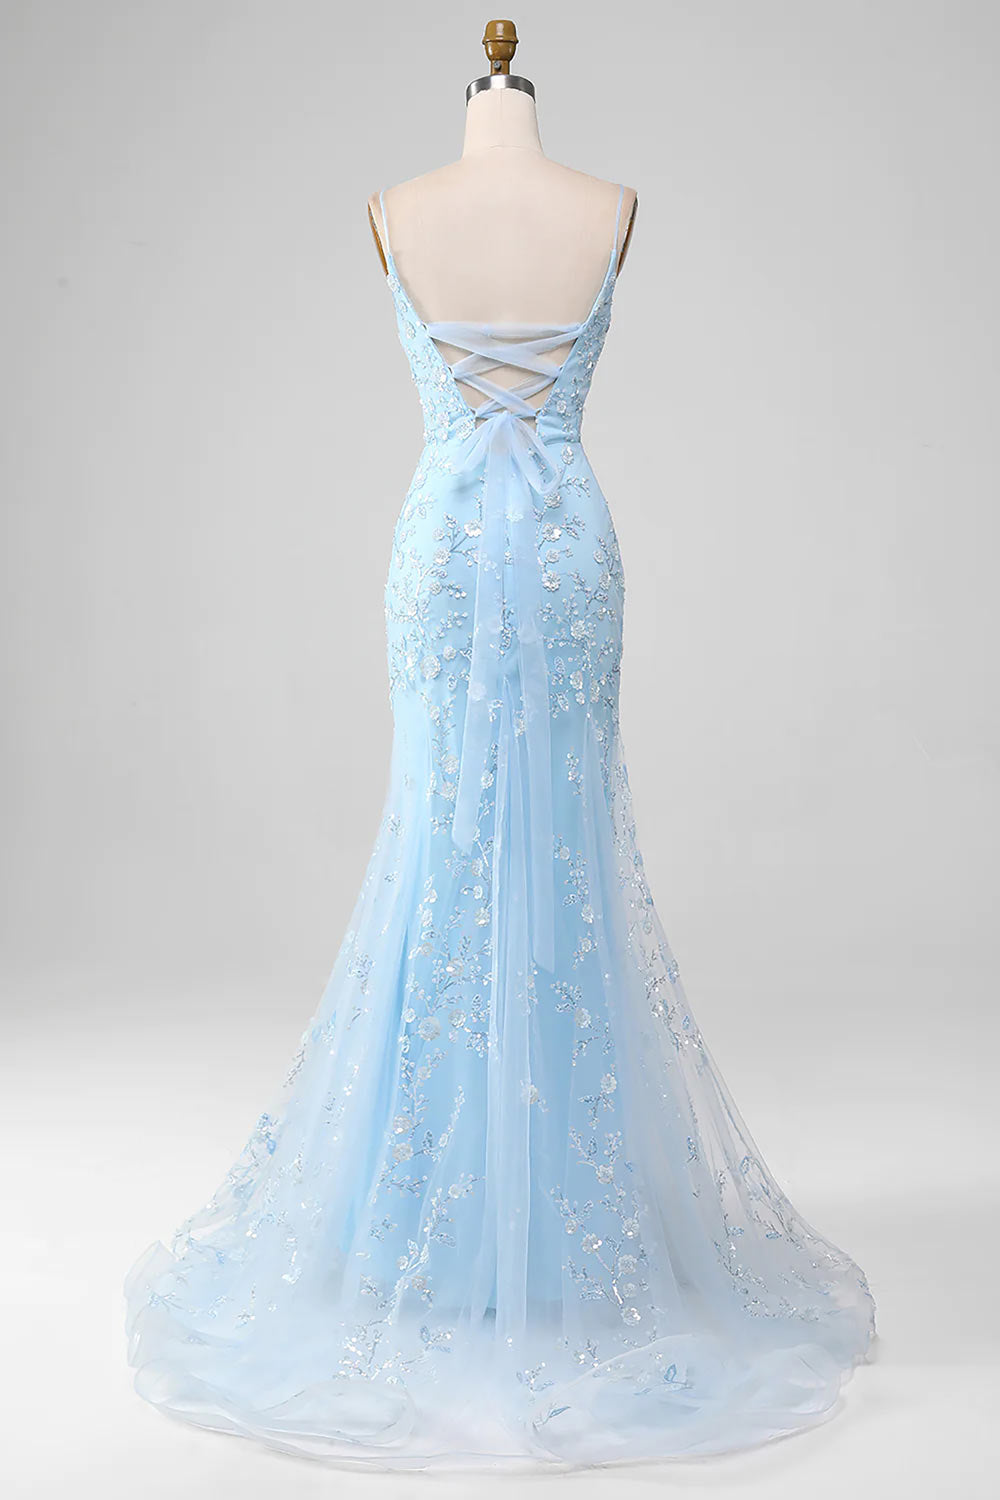 Charming Strapless Prom Dress, Light Blue Sheath Evening Dress, Handmade Beaded Formal Dress